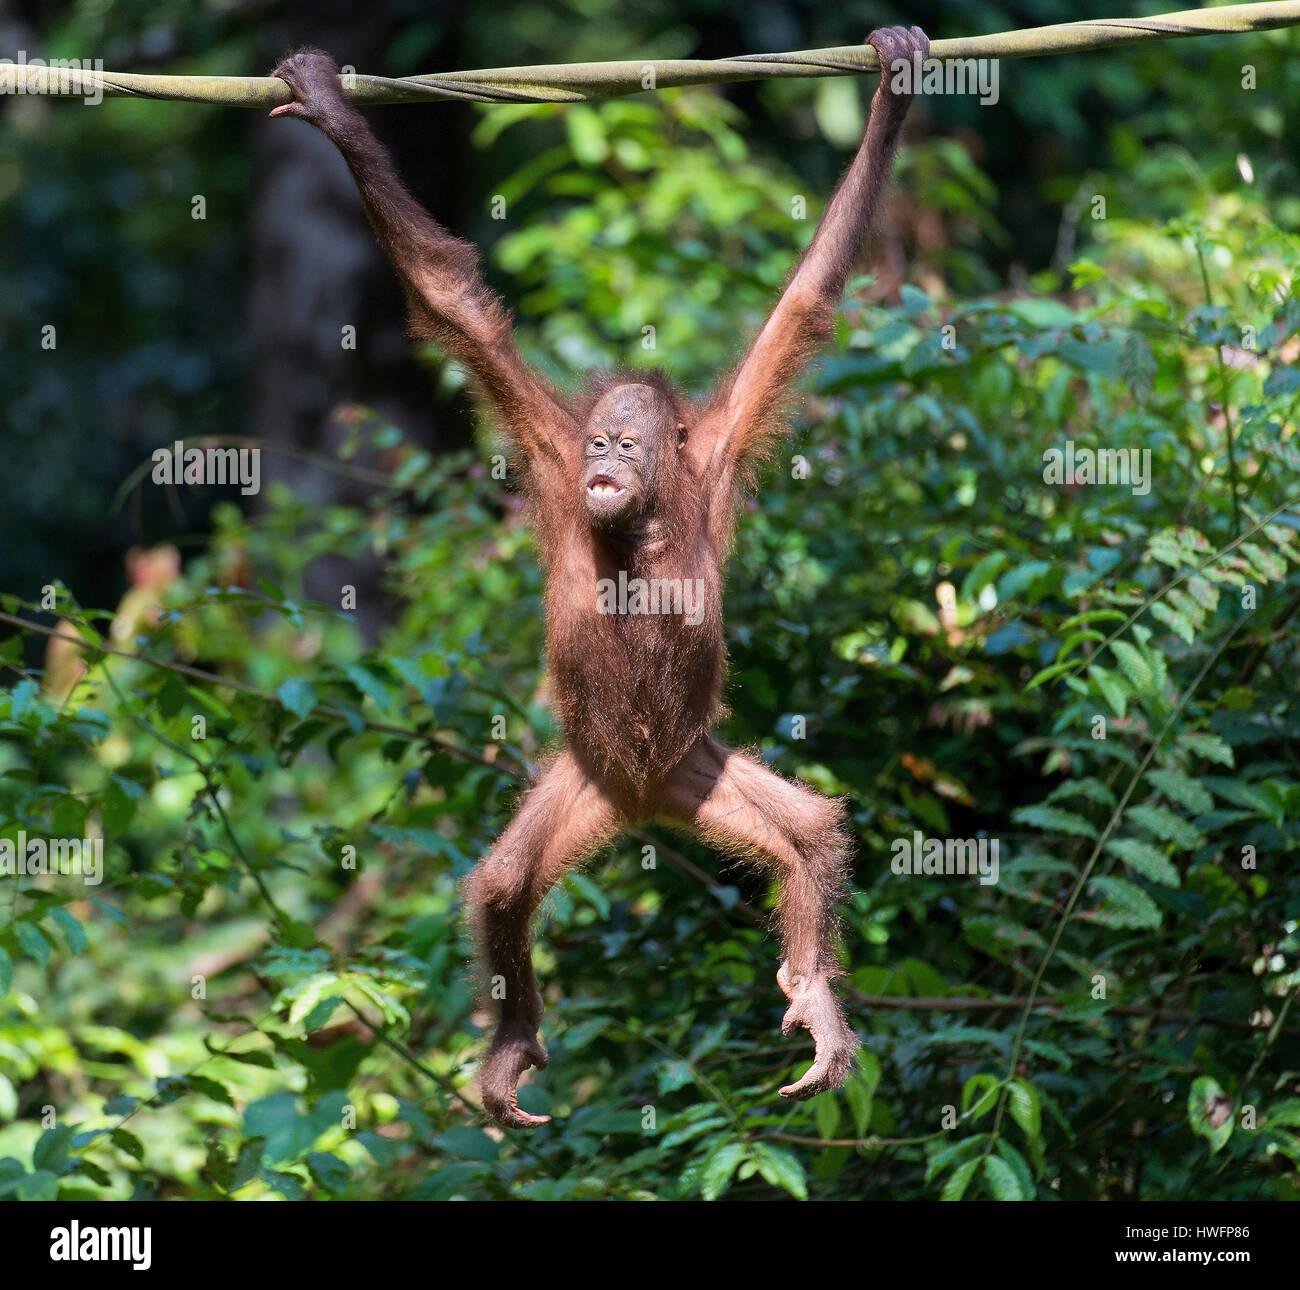 Juvenile orangutan i Sepilok Orangutan Rehabilitation Centre, Sabah, Borneo. Stock Photo